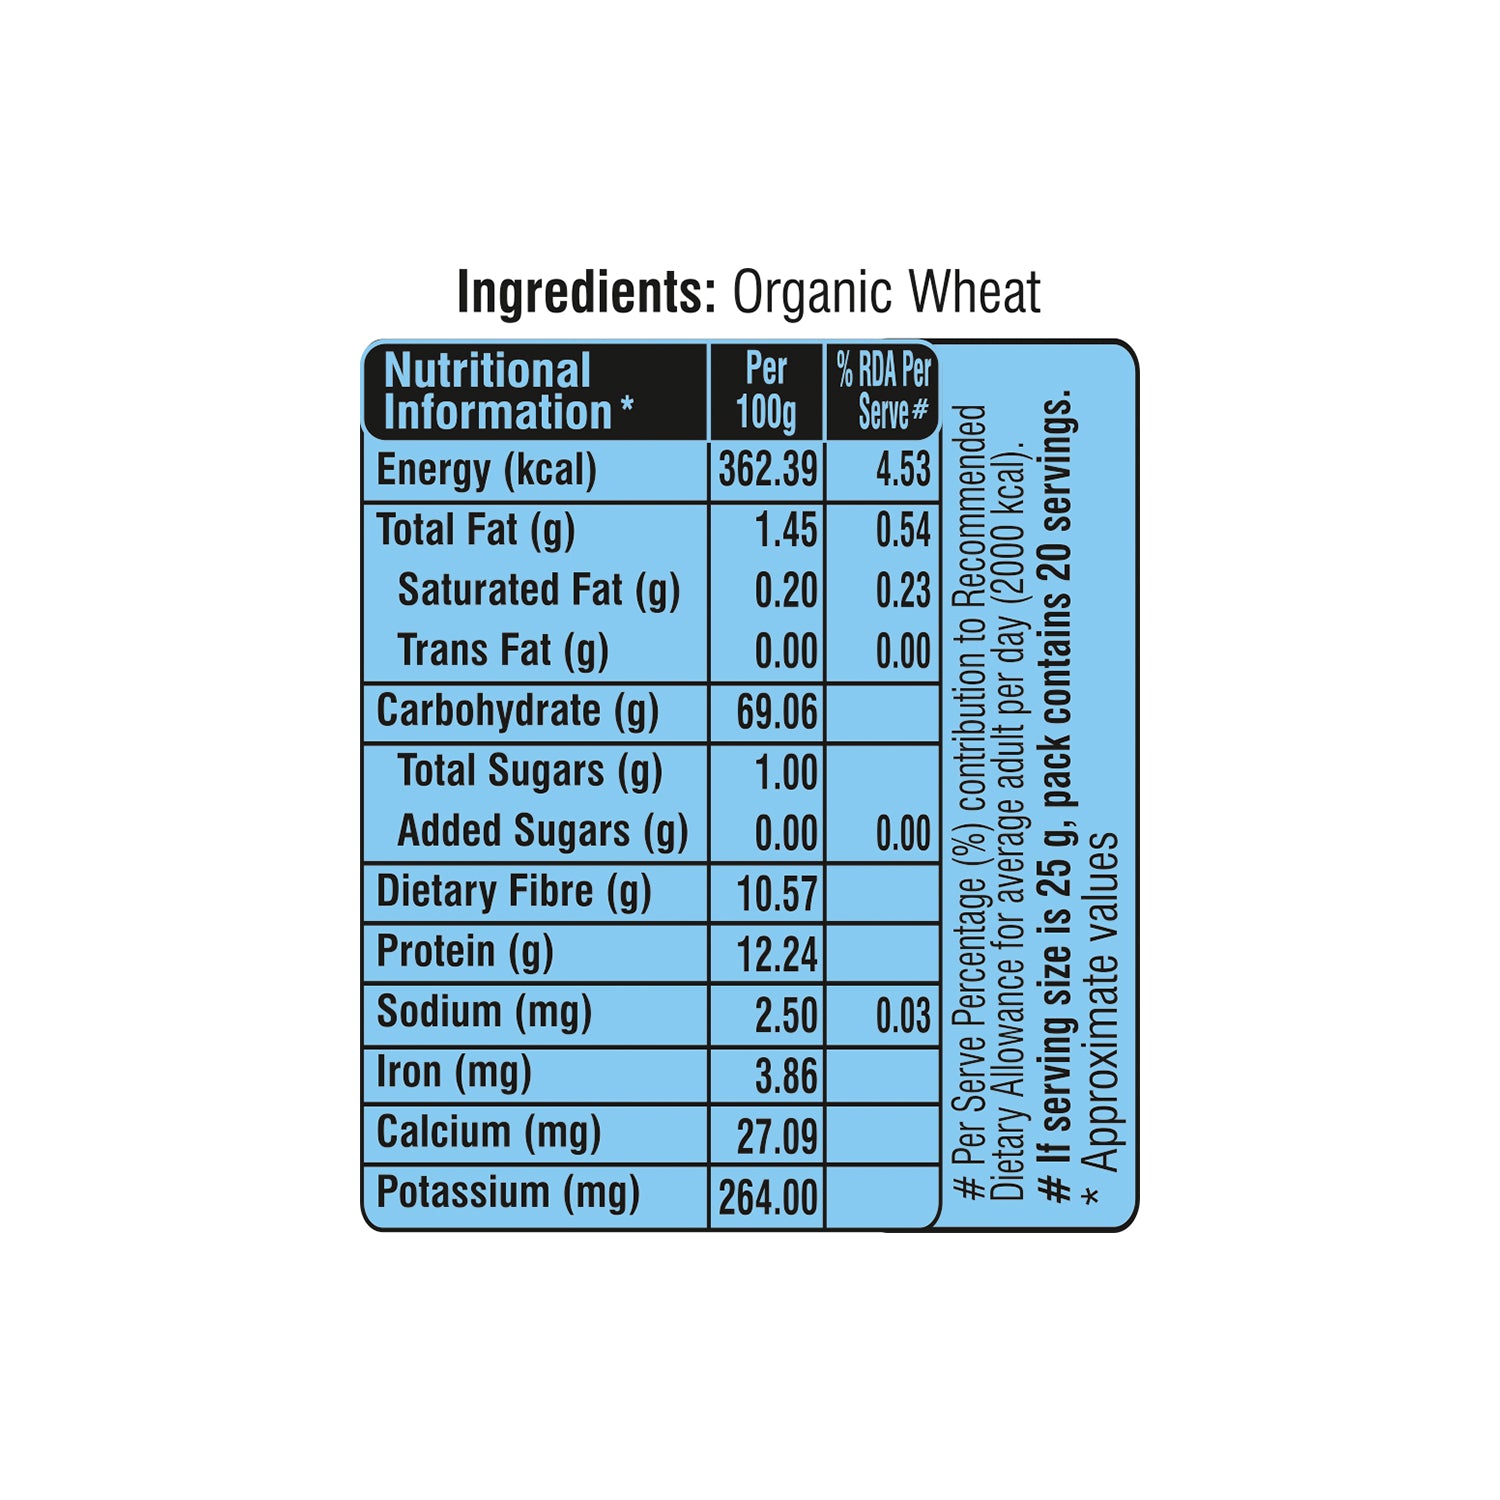 Organic Wheat Dalia 500g